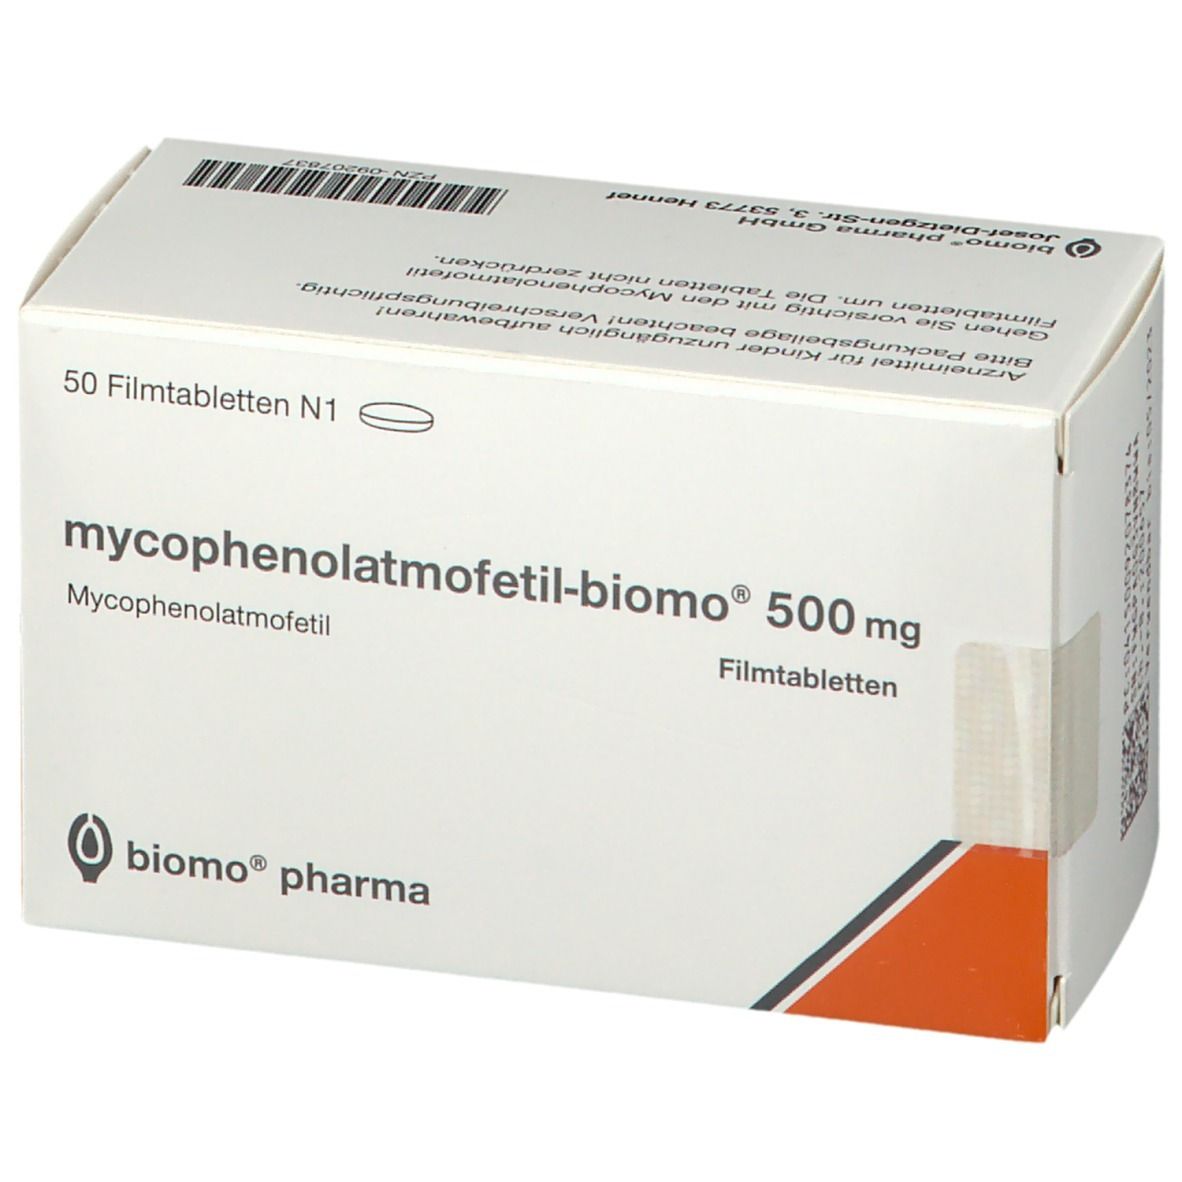 mycophenolatmofetil-biomo® 500 mg